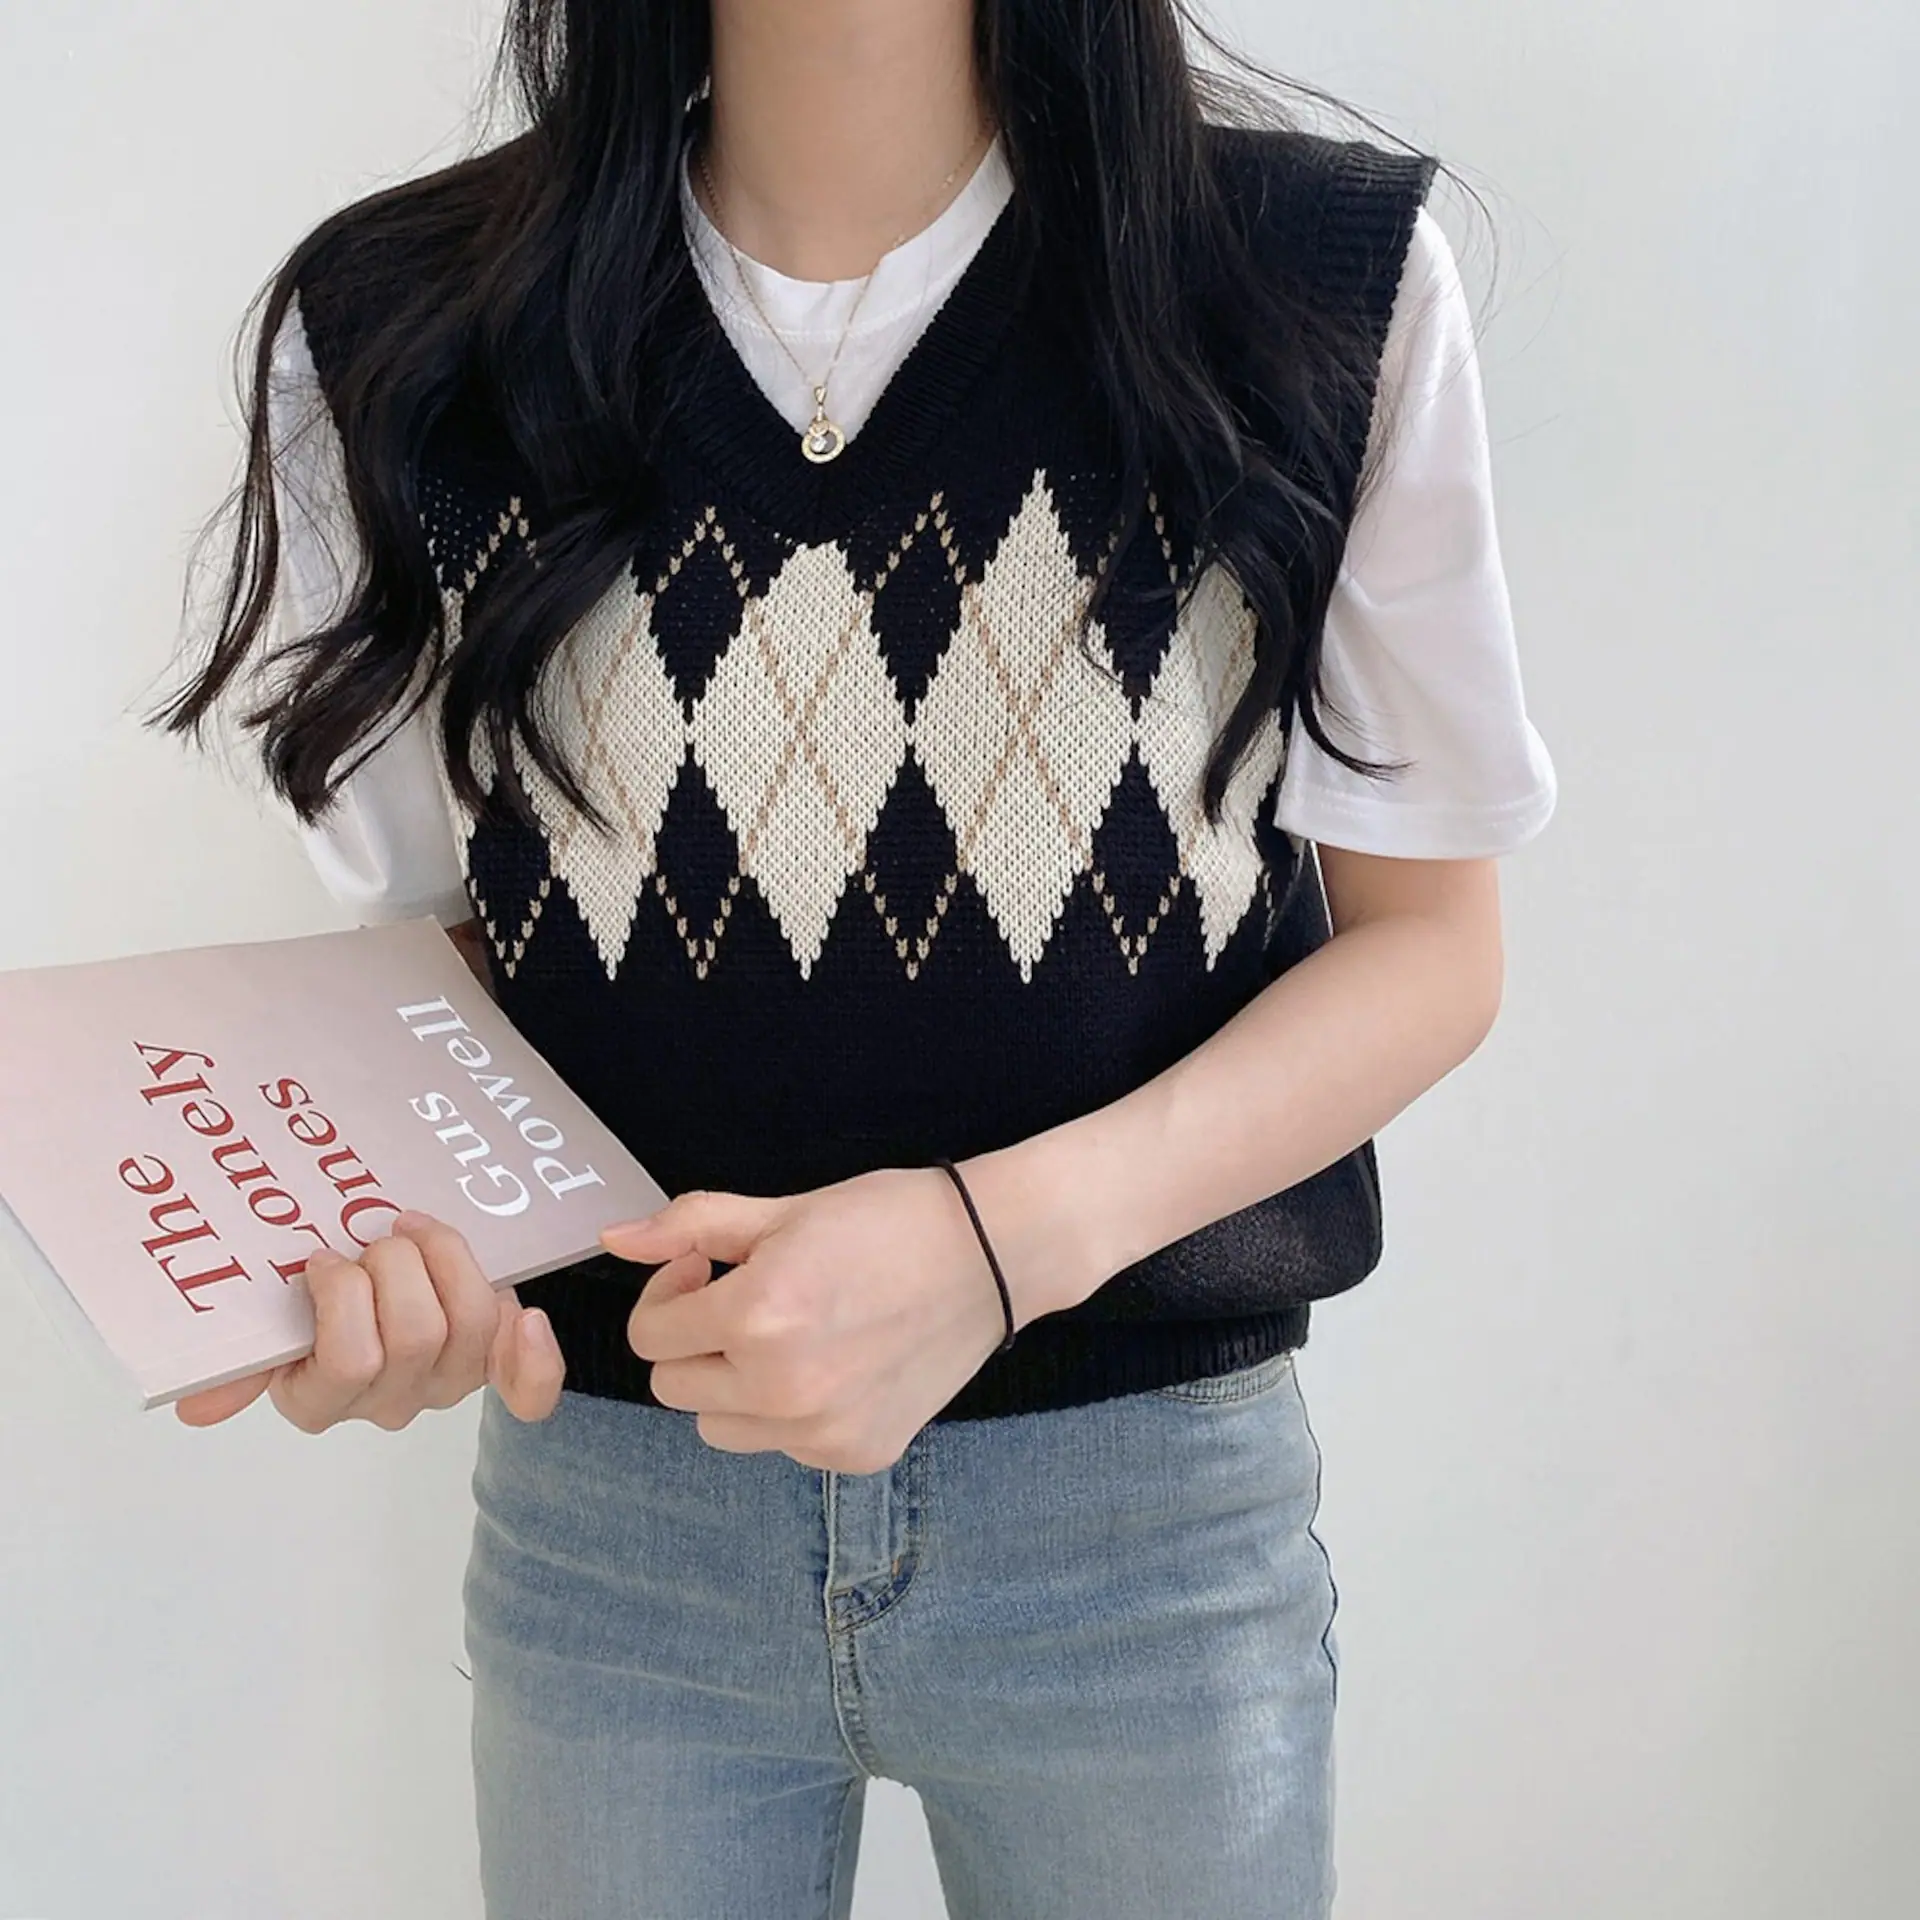 Bật mí cách phối áo len sơ mi cực đỉnh | IVY moda